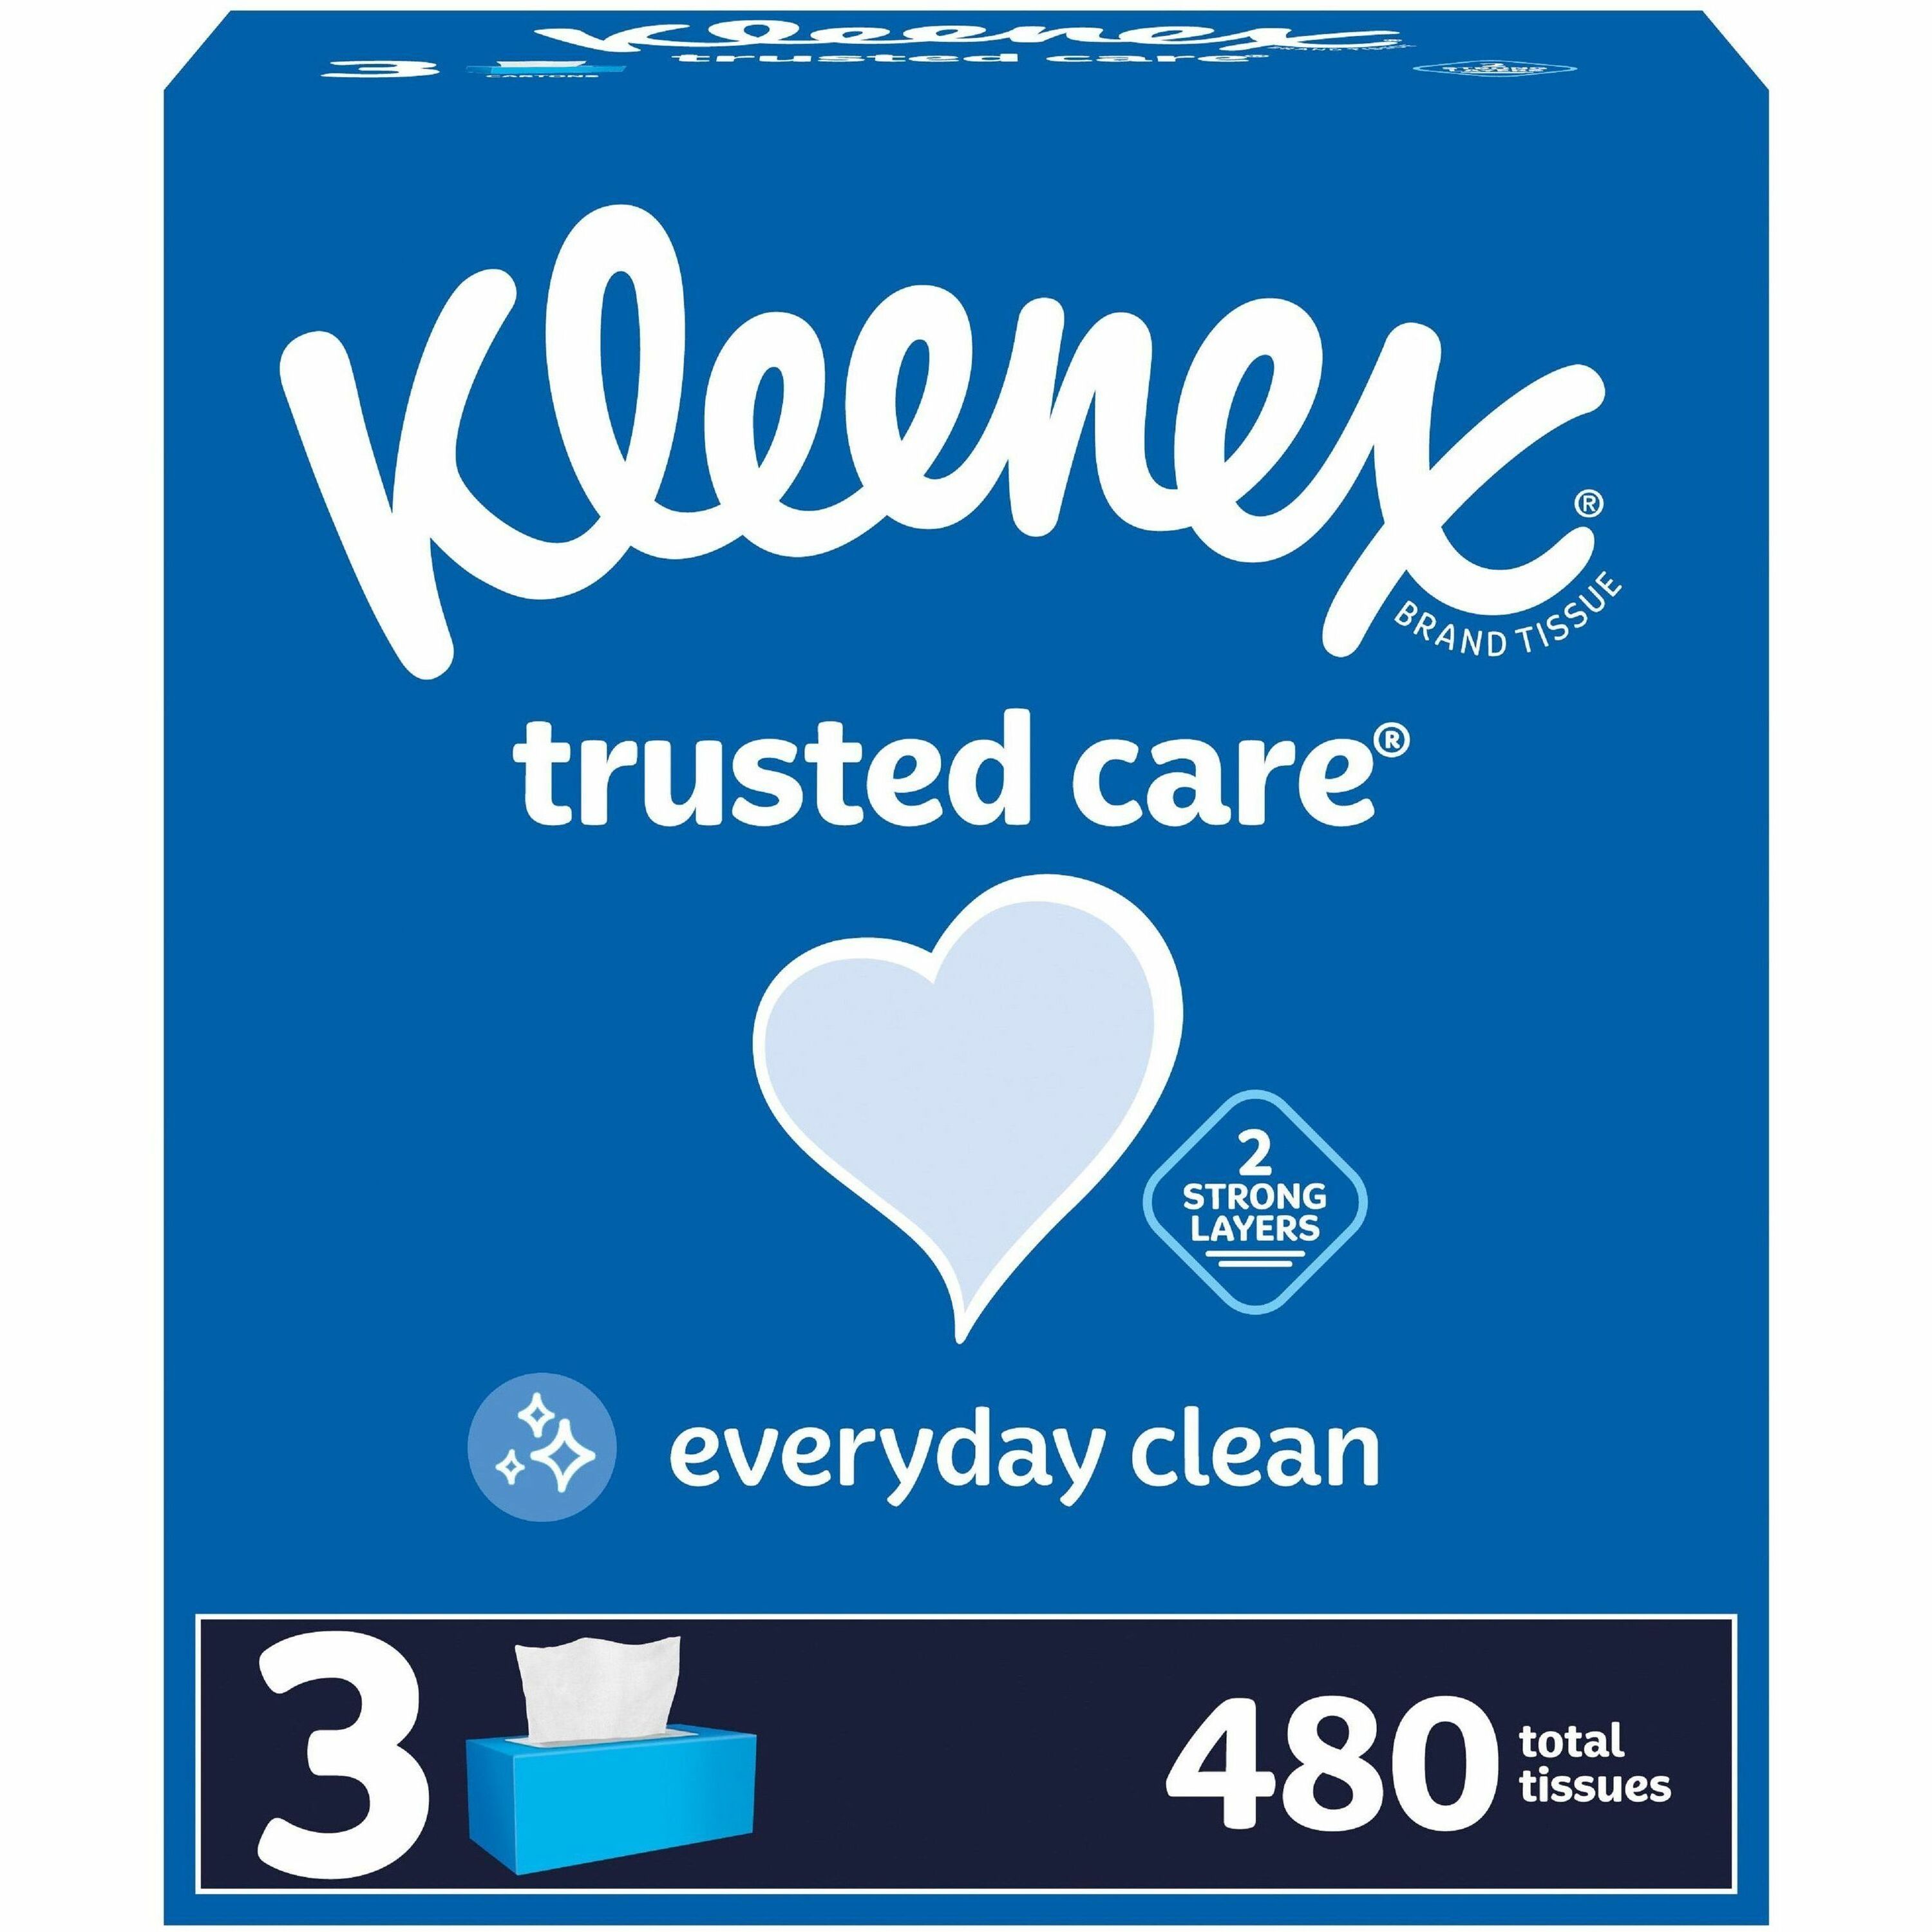 Rand sarcoom Uitsluiten Kleenex trusted care Tissues - Envision Xpress